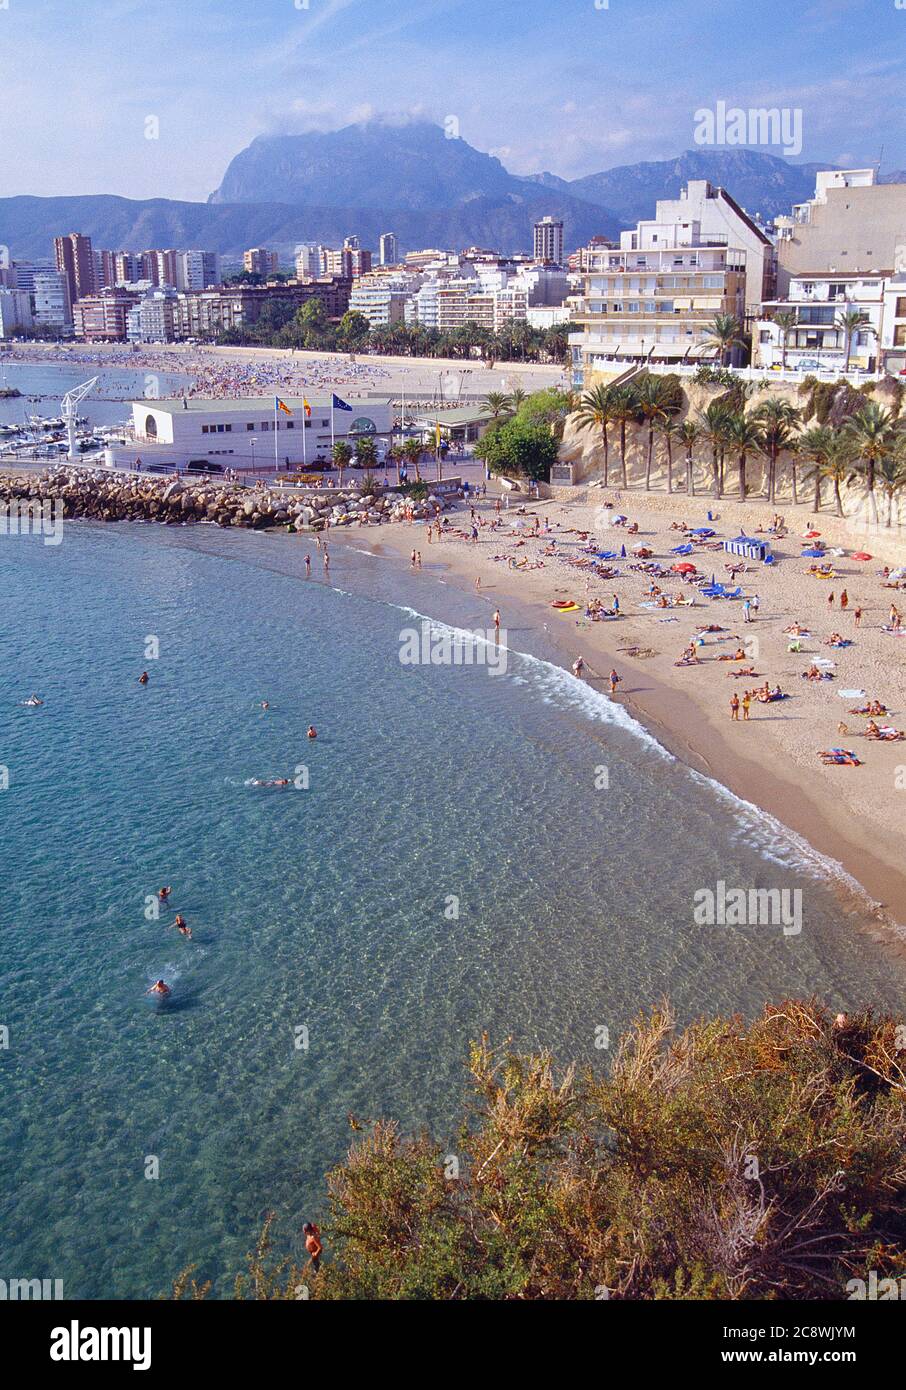 Beaches. Benidorm, Alicante province, Comunidad Valenciana, Spain. Stock Photo